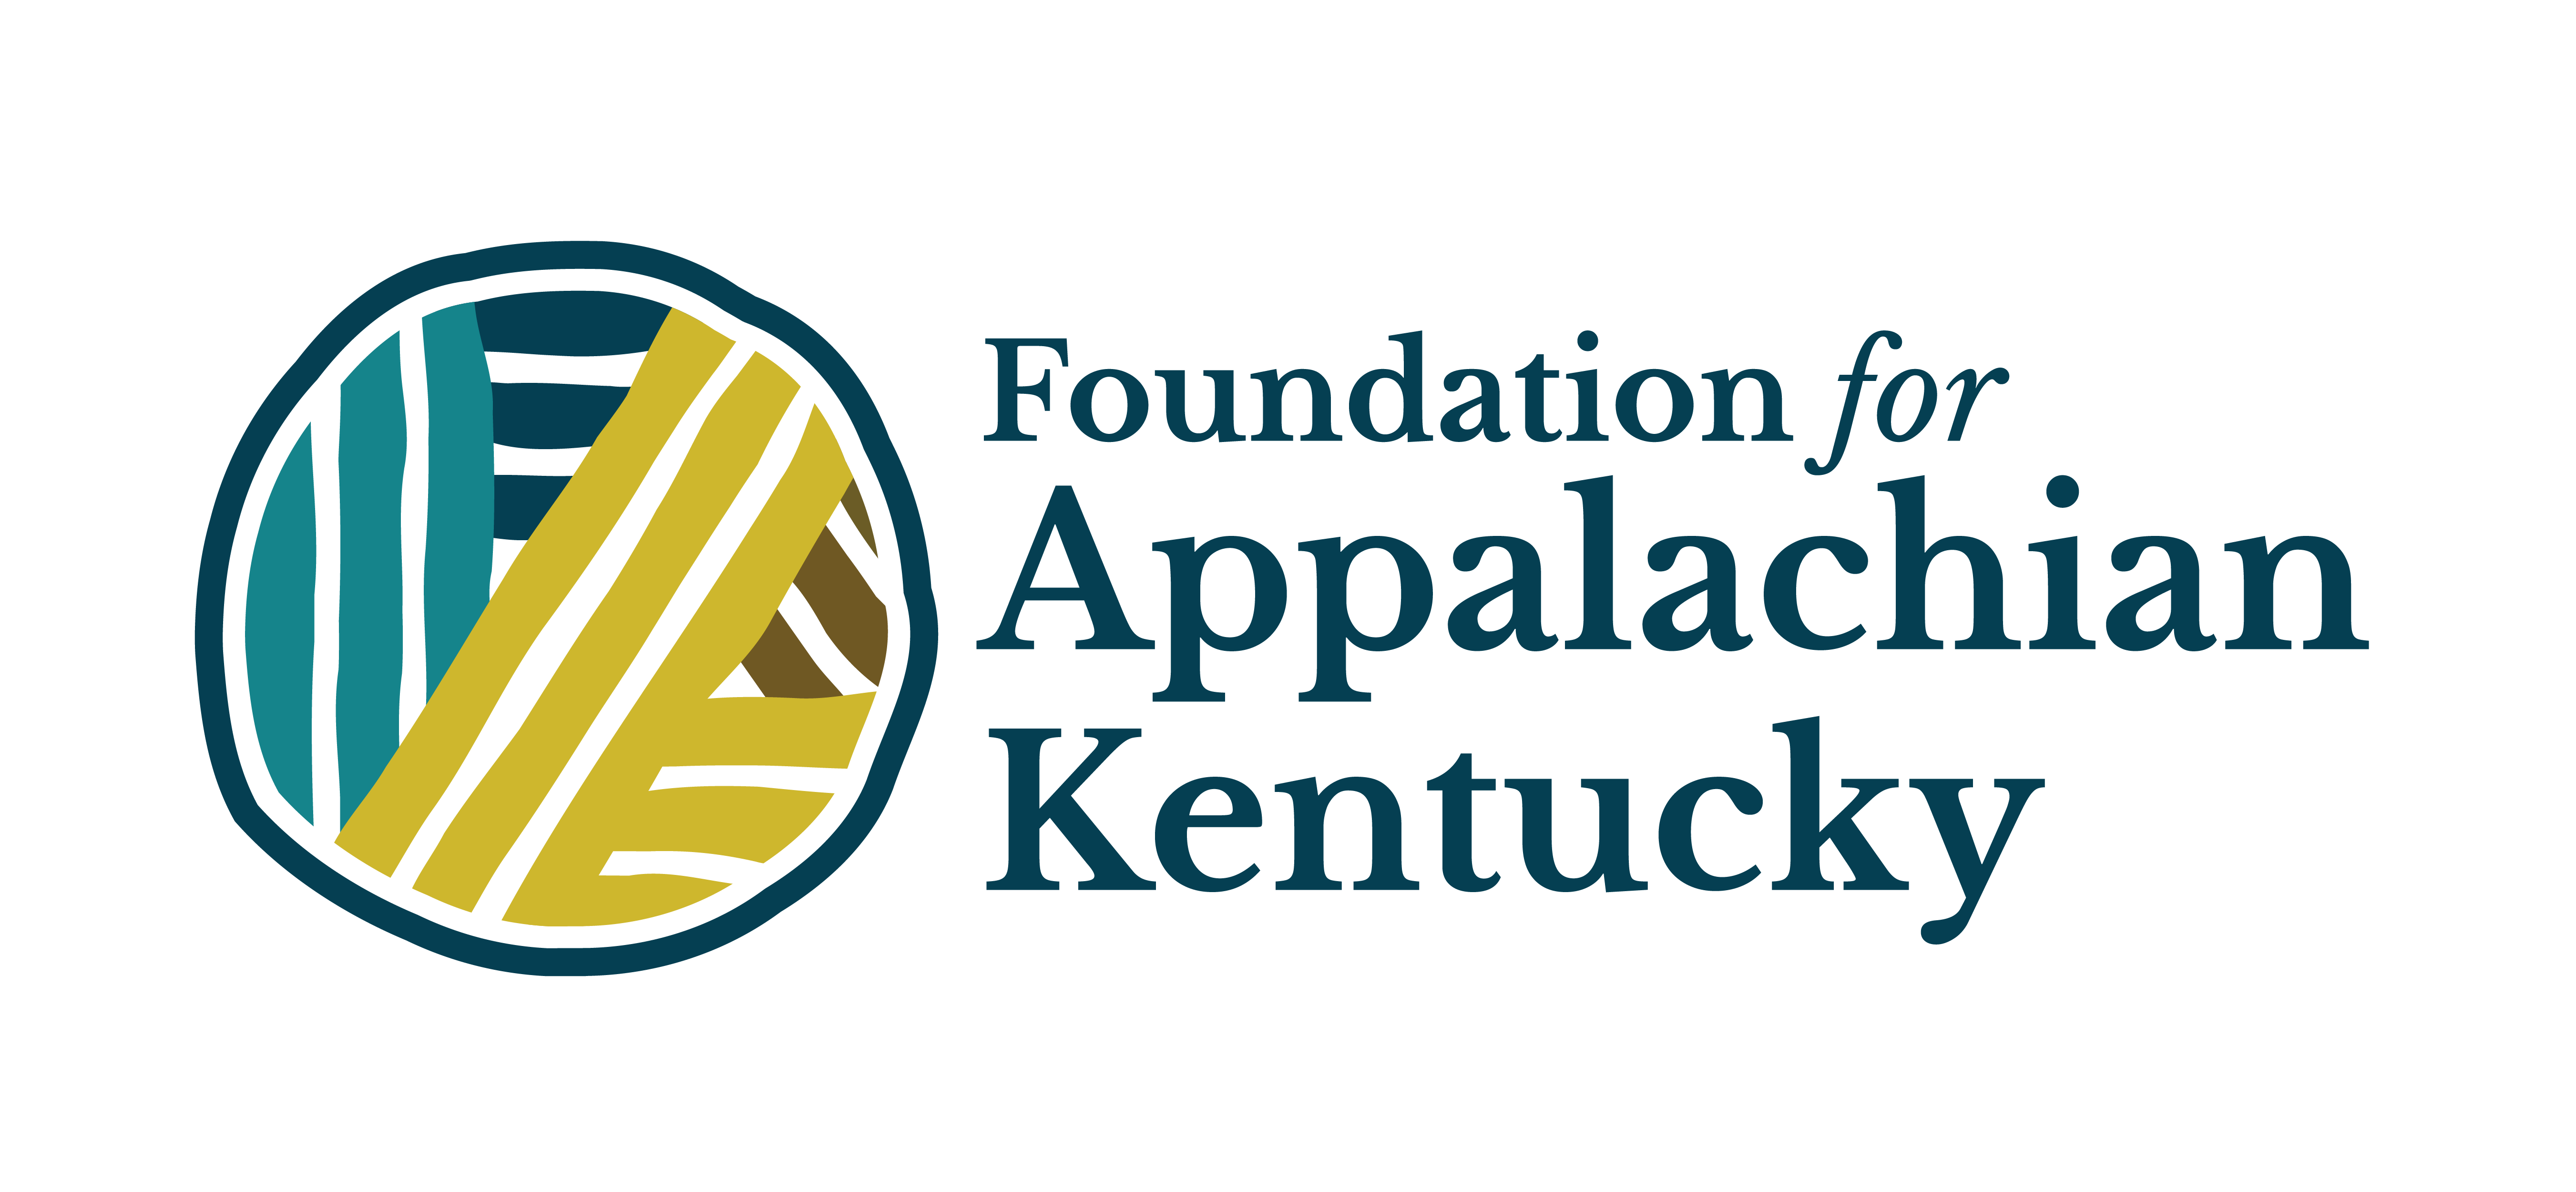 The Foundation for Appalachian Kentucky